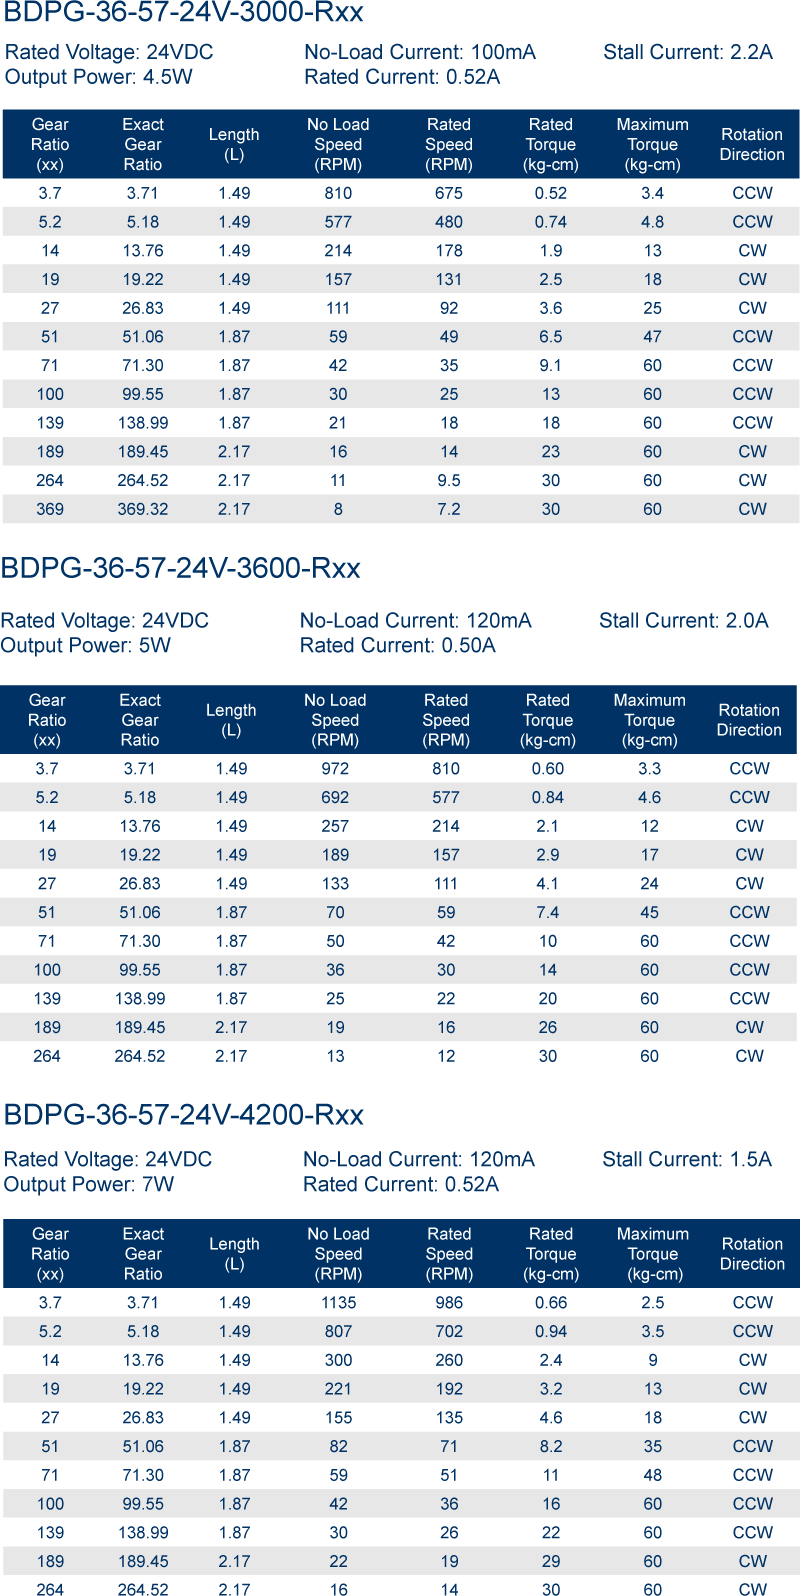 Brush DC Motors - BDPG-36-57 Specifications